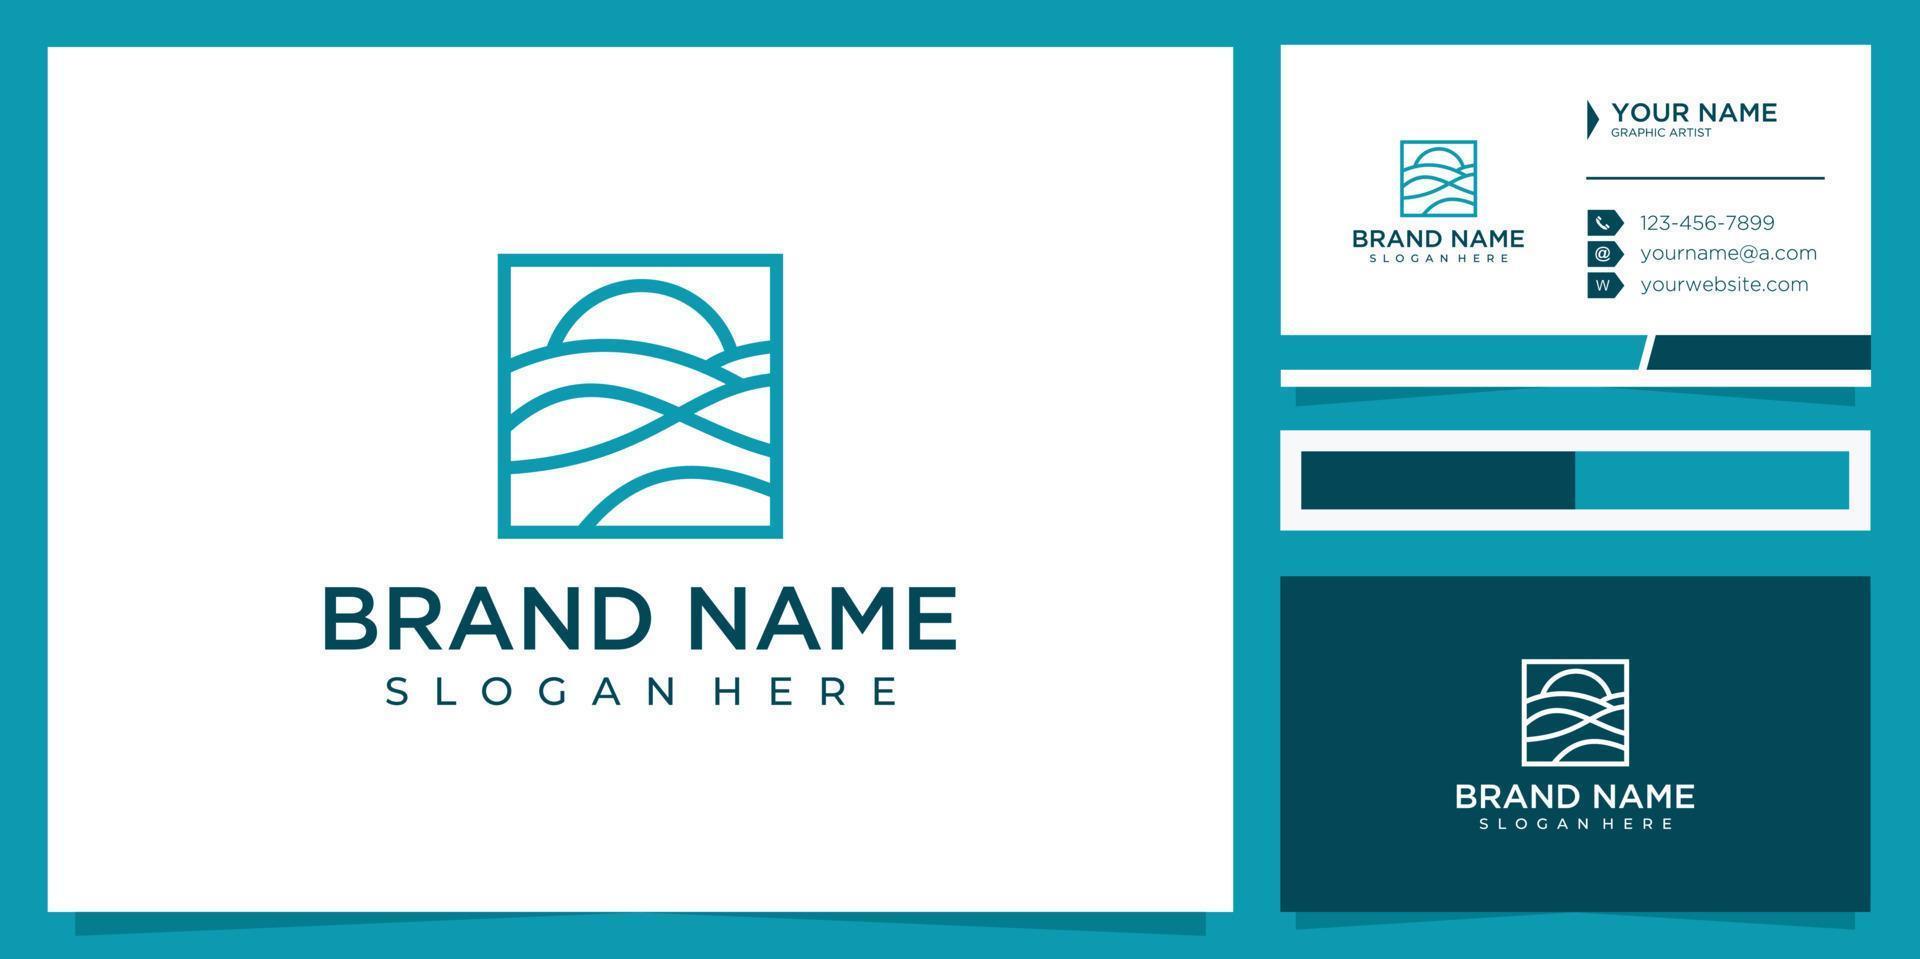 Landscape logo design illustration vector template with business card